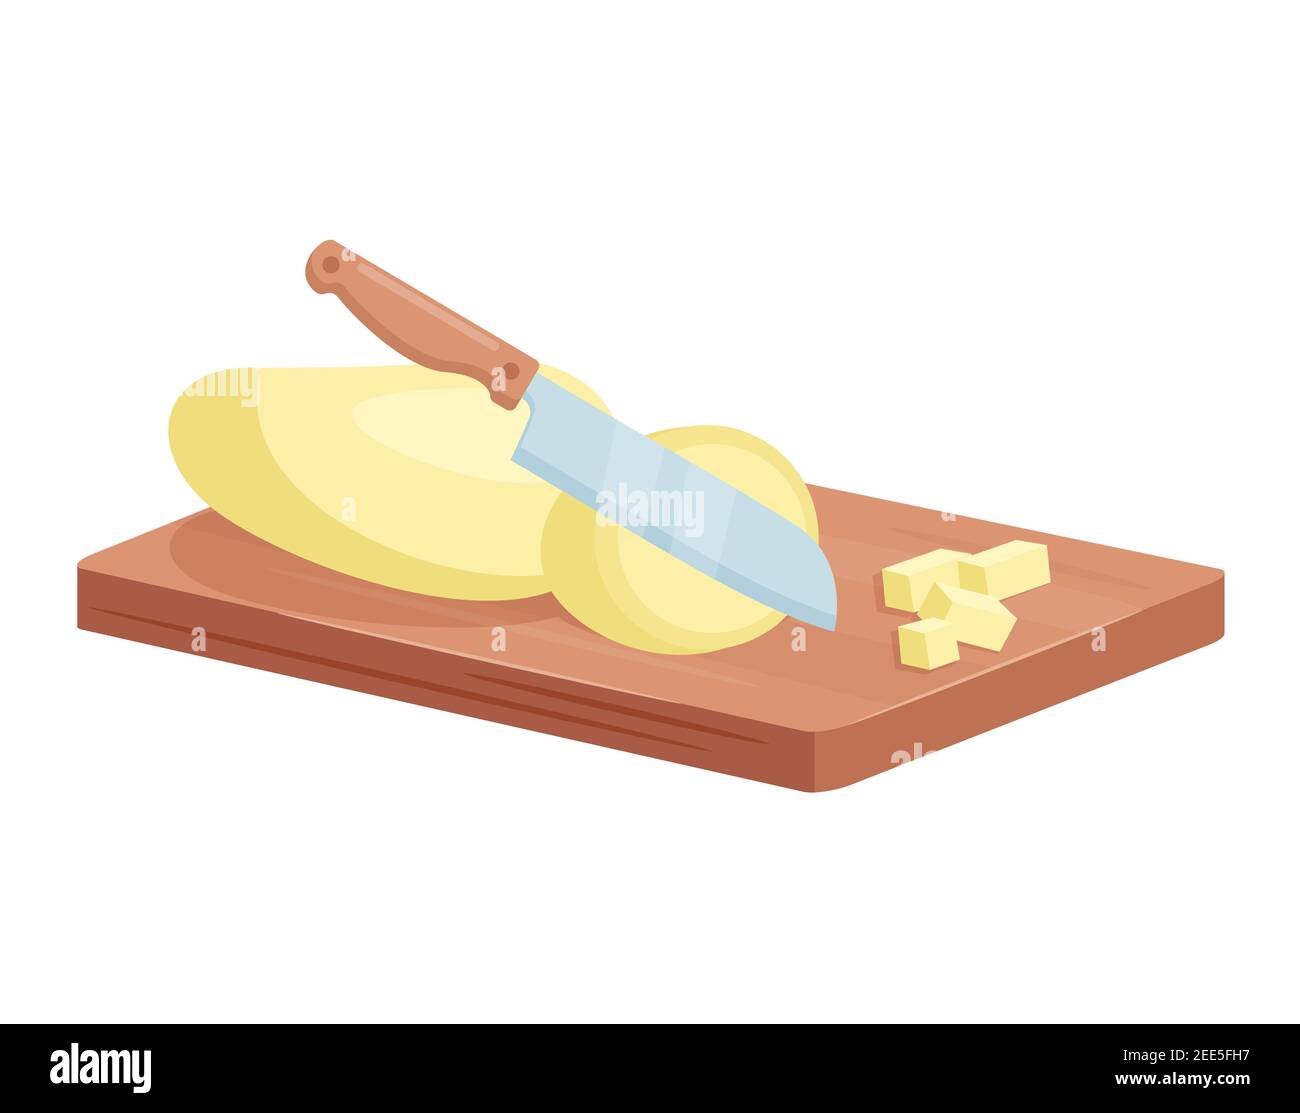 Potato cutting kitchen process, isometric knife processing raw peeled potato vegetable Stock Vector